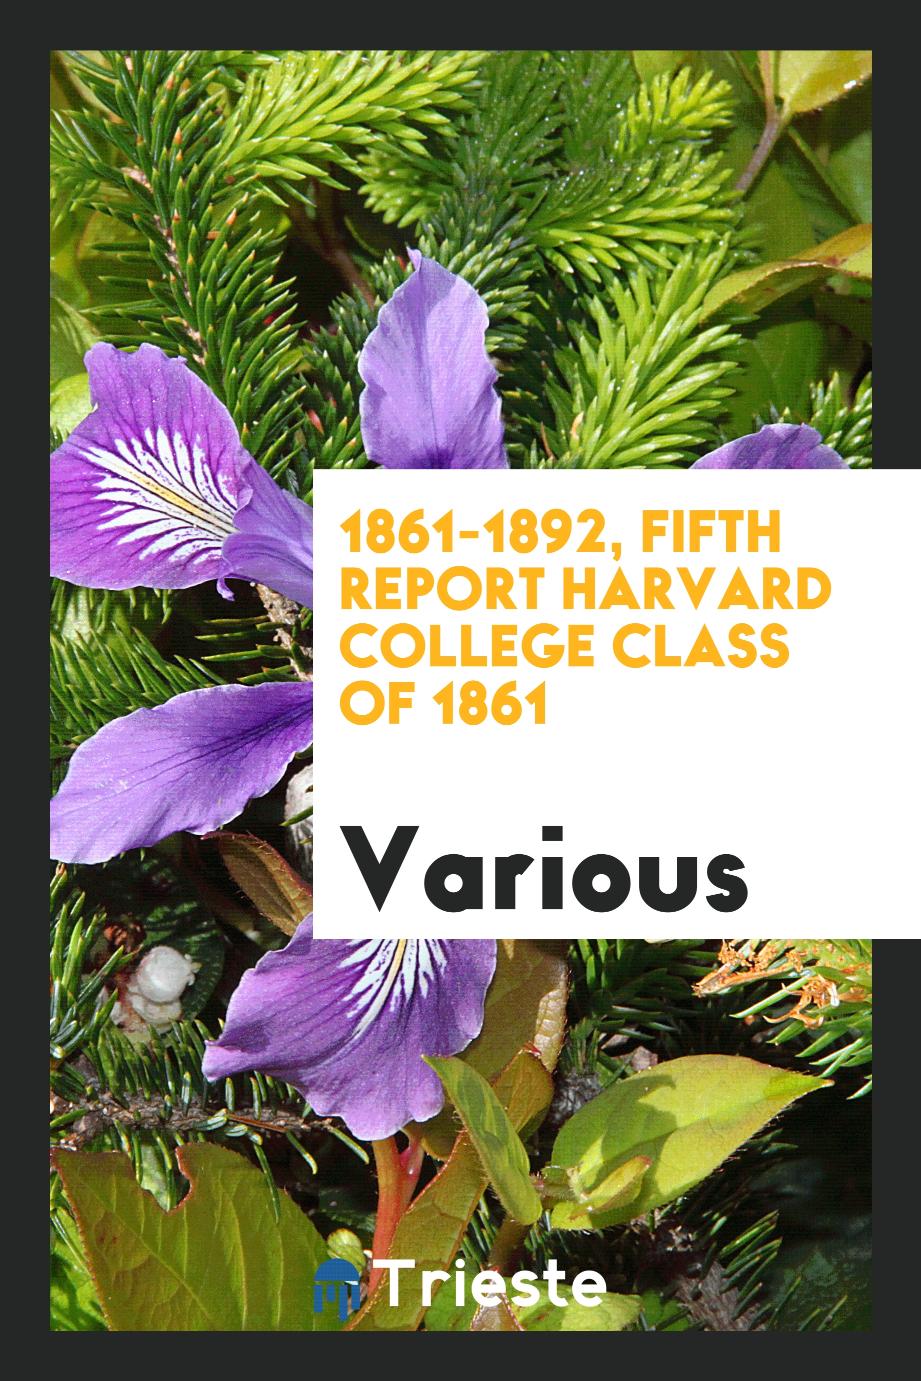 1861-1892, Fifth Report Harvard College Class of 1861